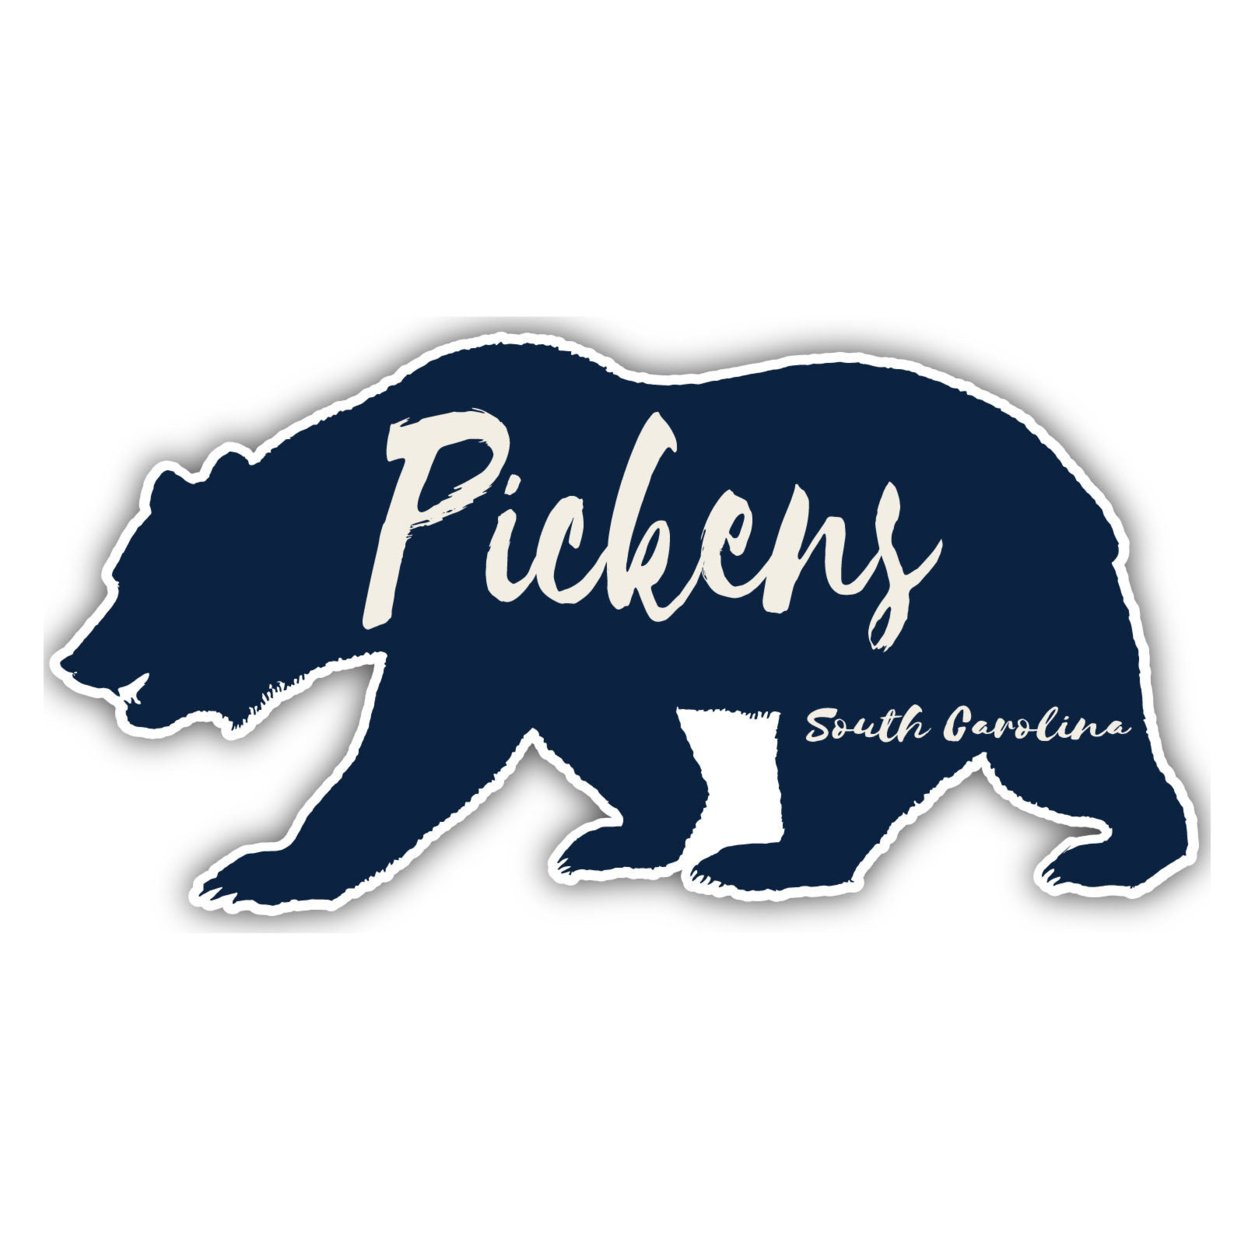 Pickens South Carolina Souvenir Decorative Stickers (Choose Theme And Size) - Single Unit, 4-Inch, Bear